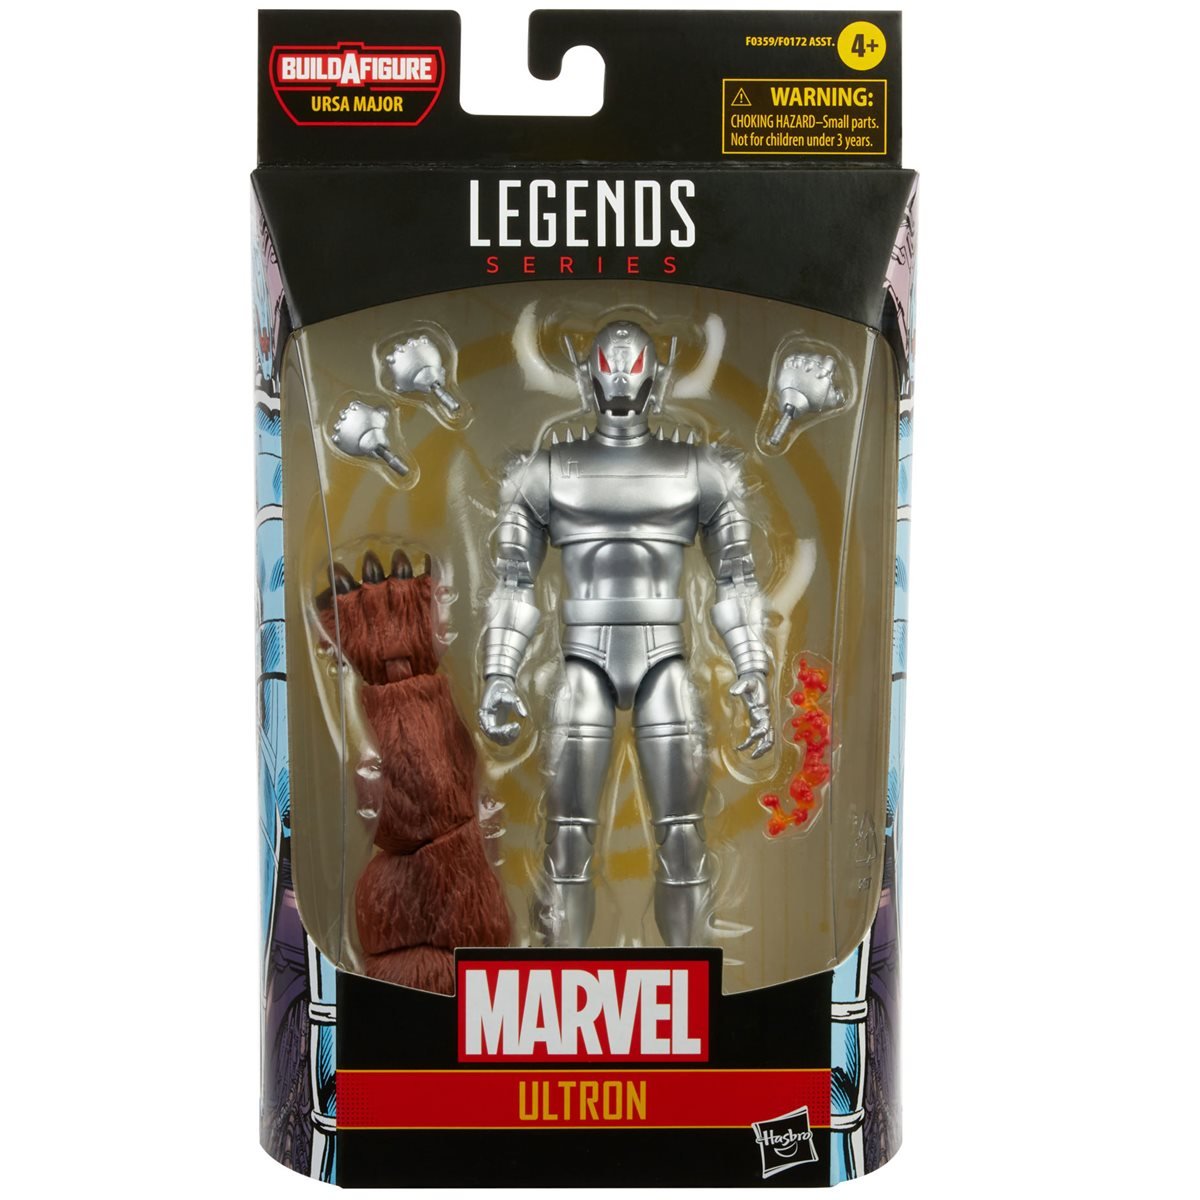 Marvel Legends Ursa Major build a figure wave Comic Ultron 6-inch figure packaging front